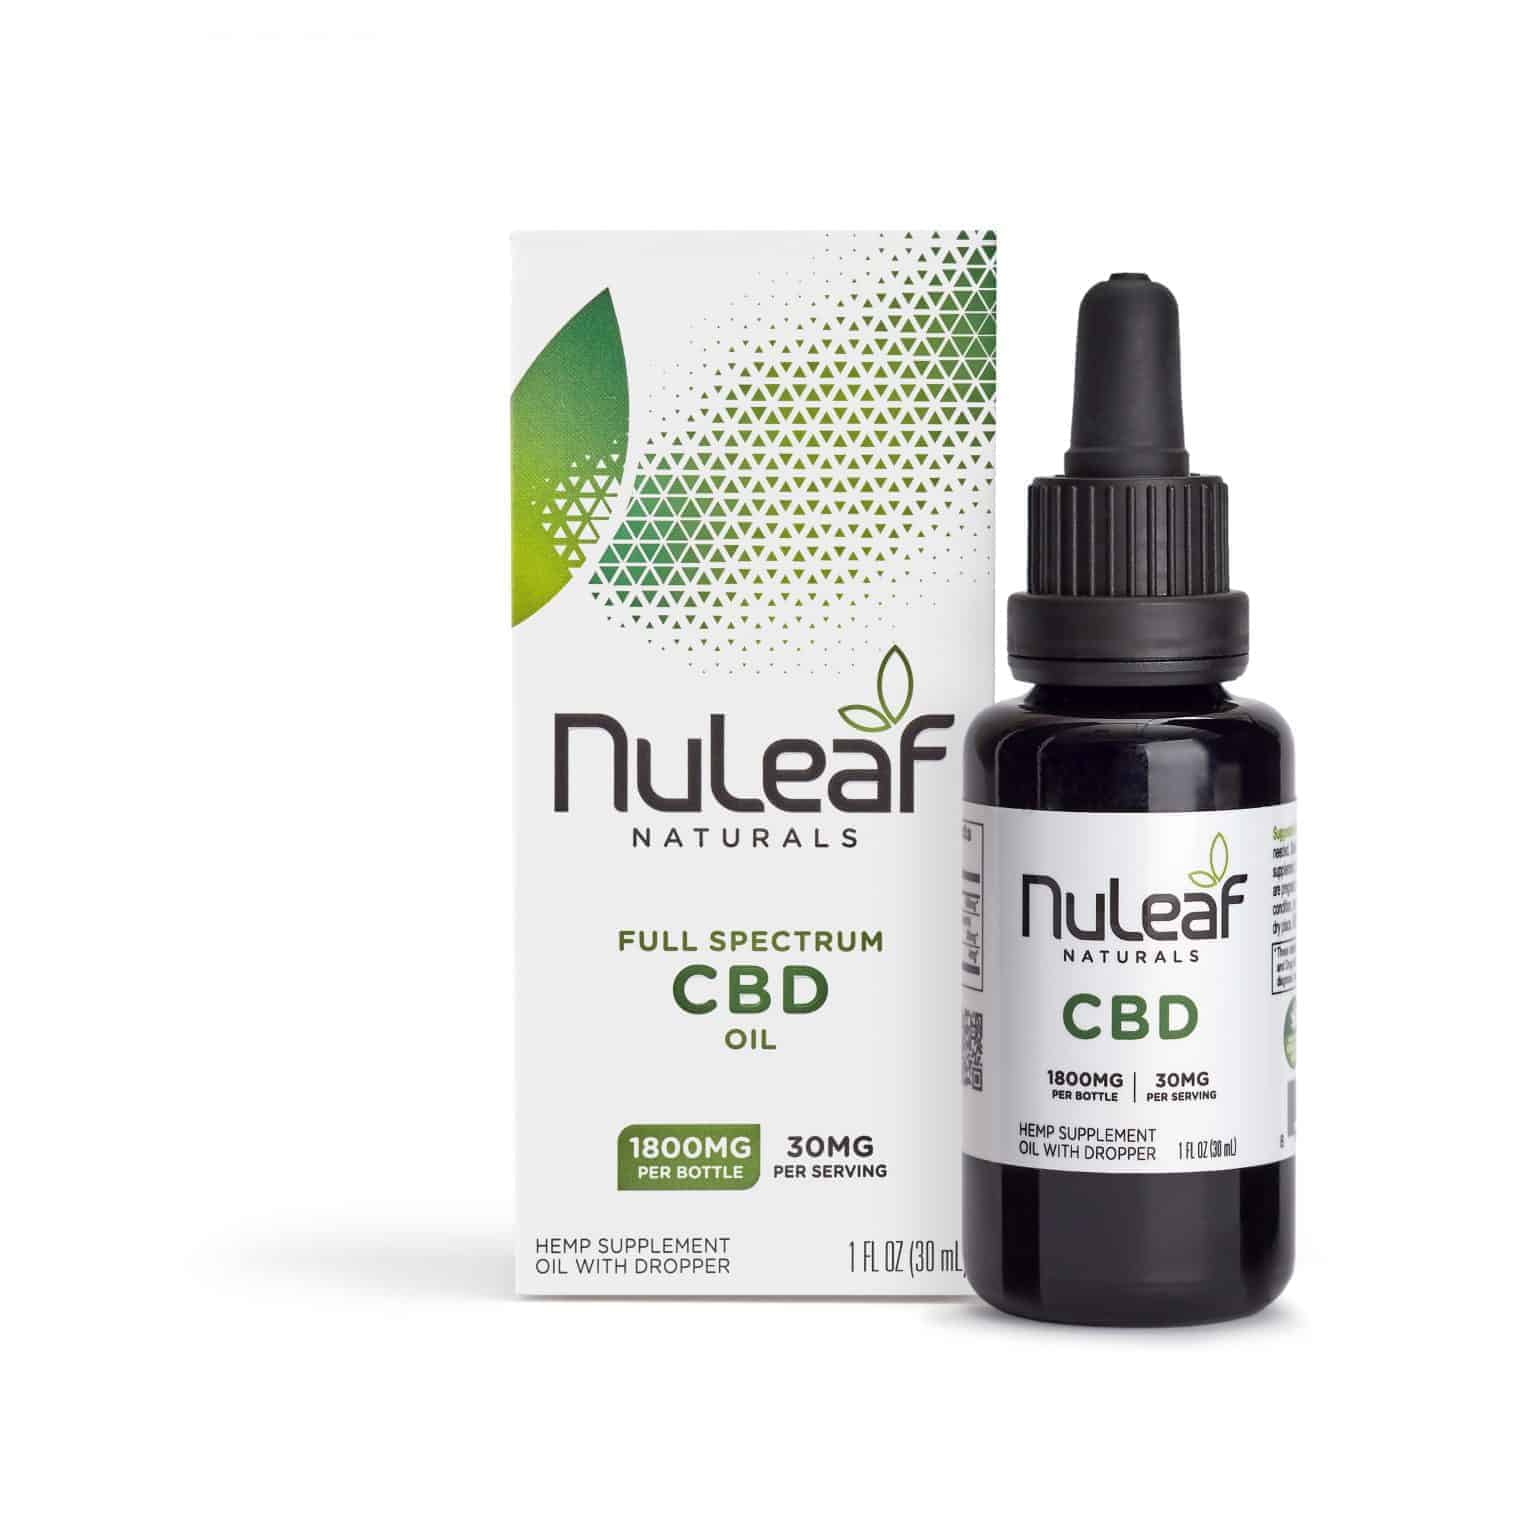 NuLeaf-Oil-1800mg-box-bottle-1536x1536